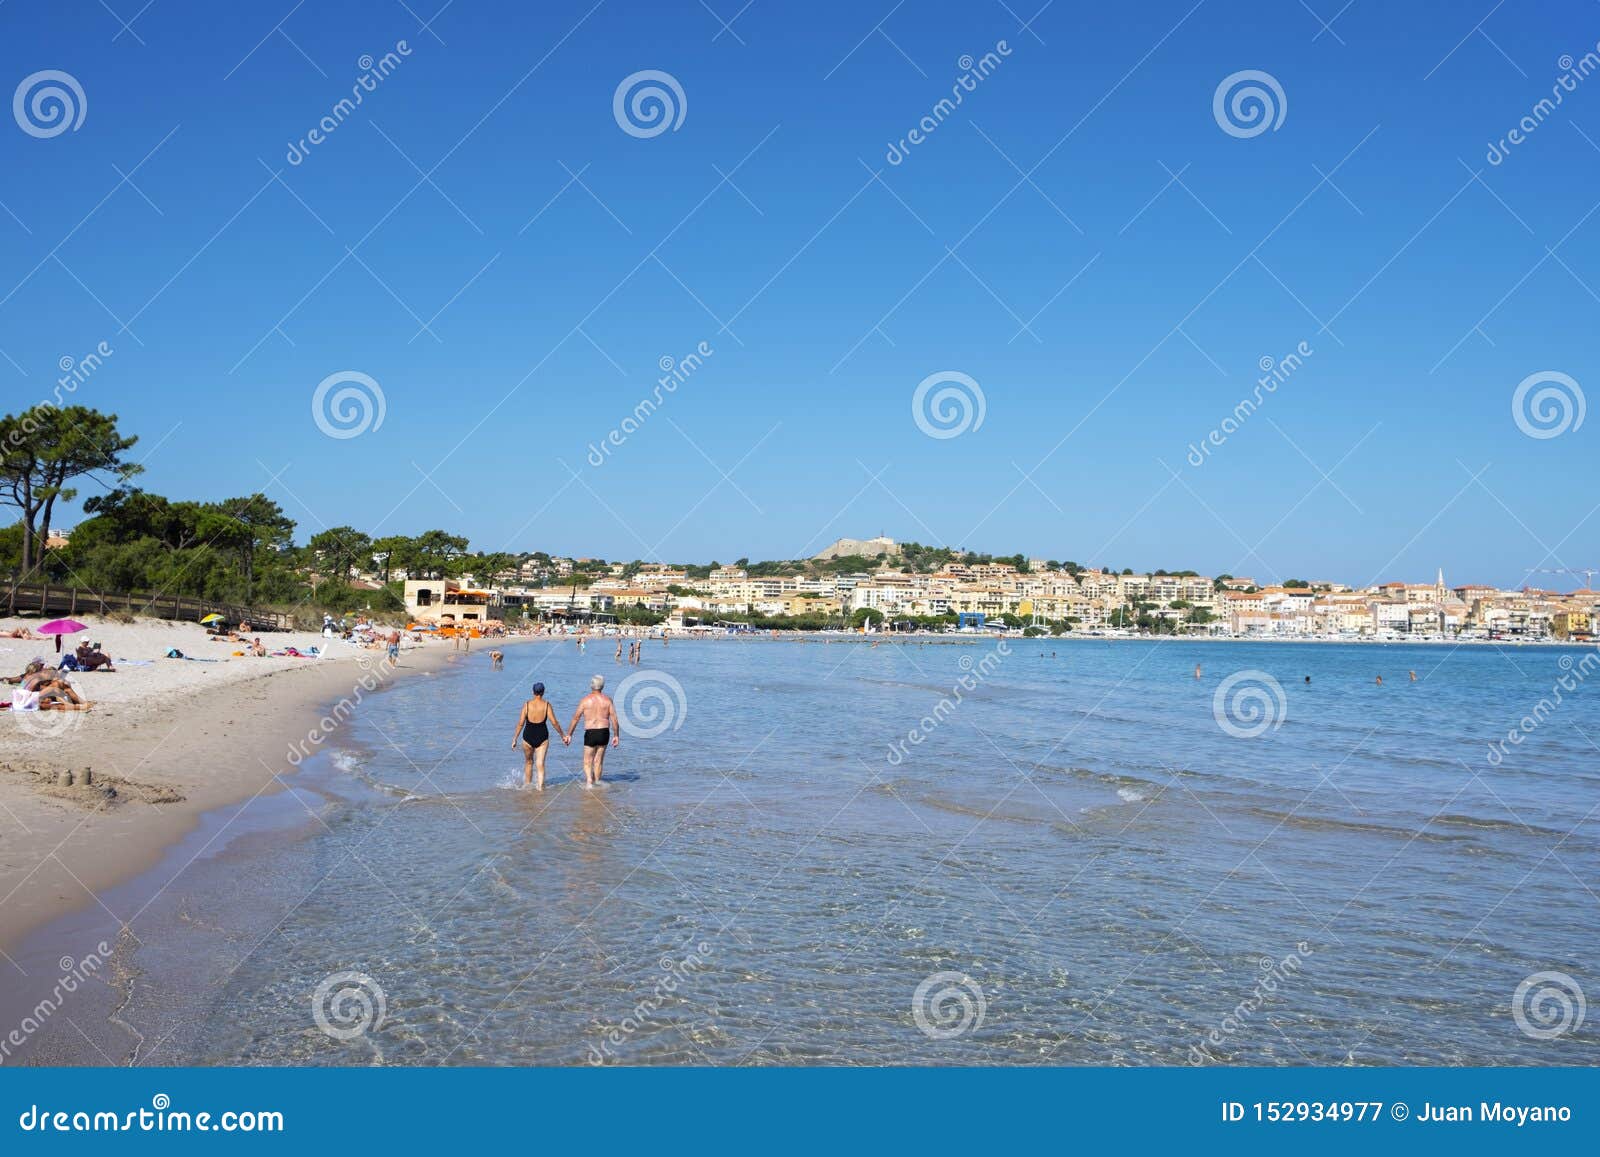 Beaches Ile Rousse Corsica France Mediterranean Europe 